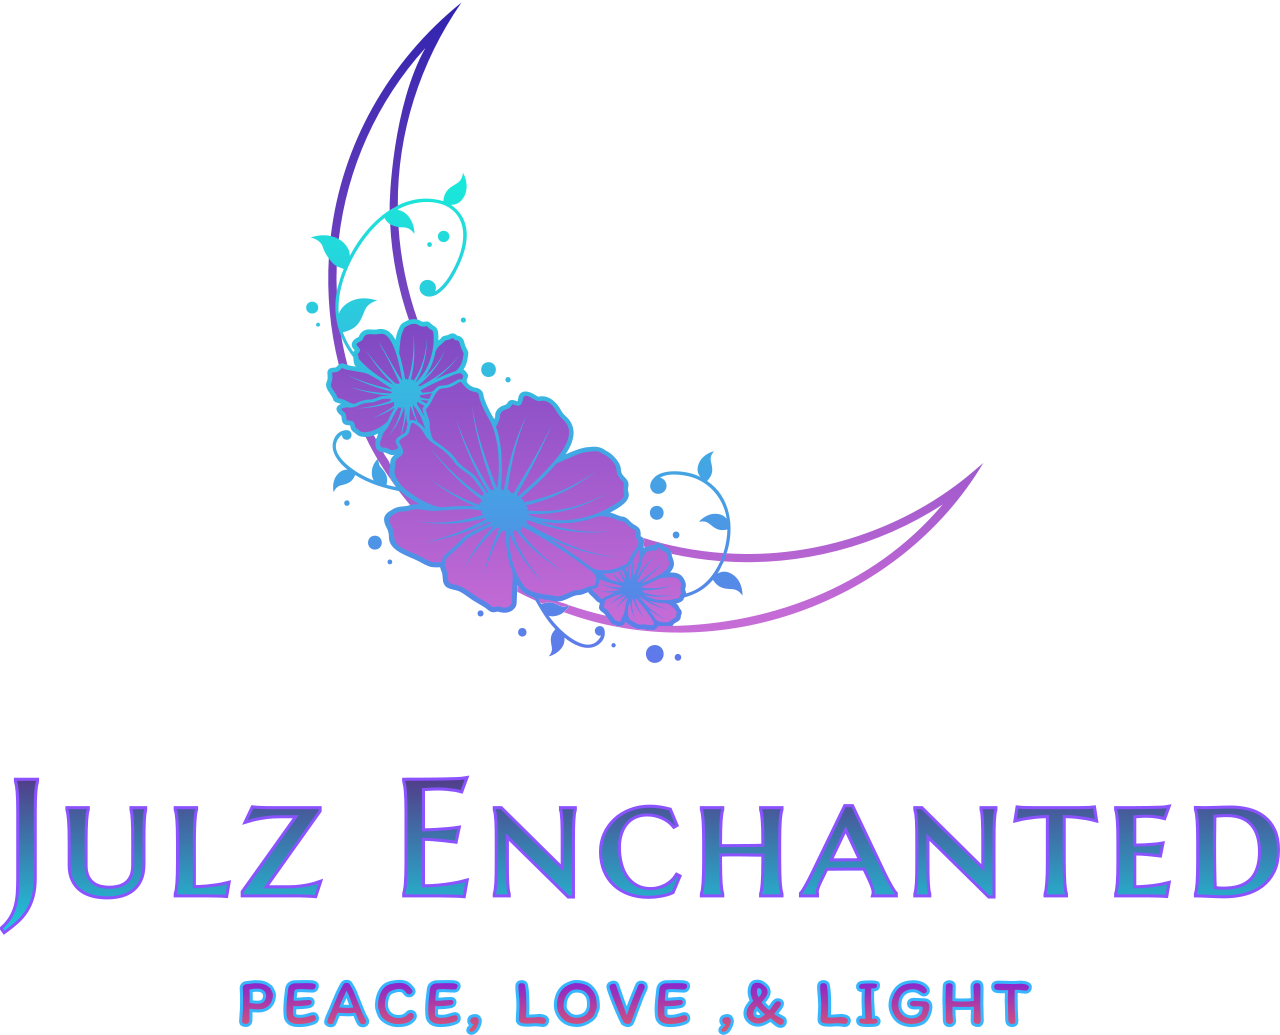 Julz Enchanted's logo